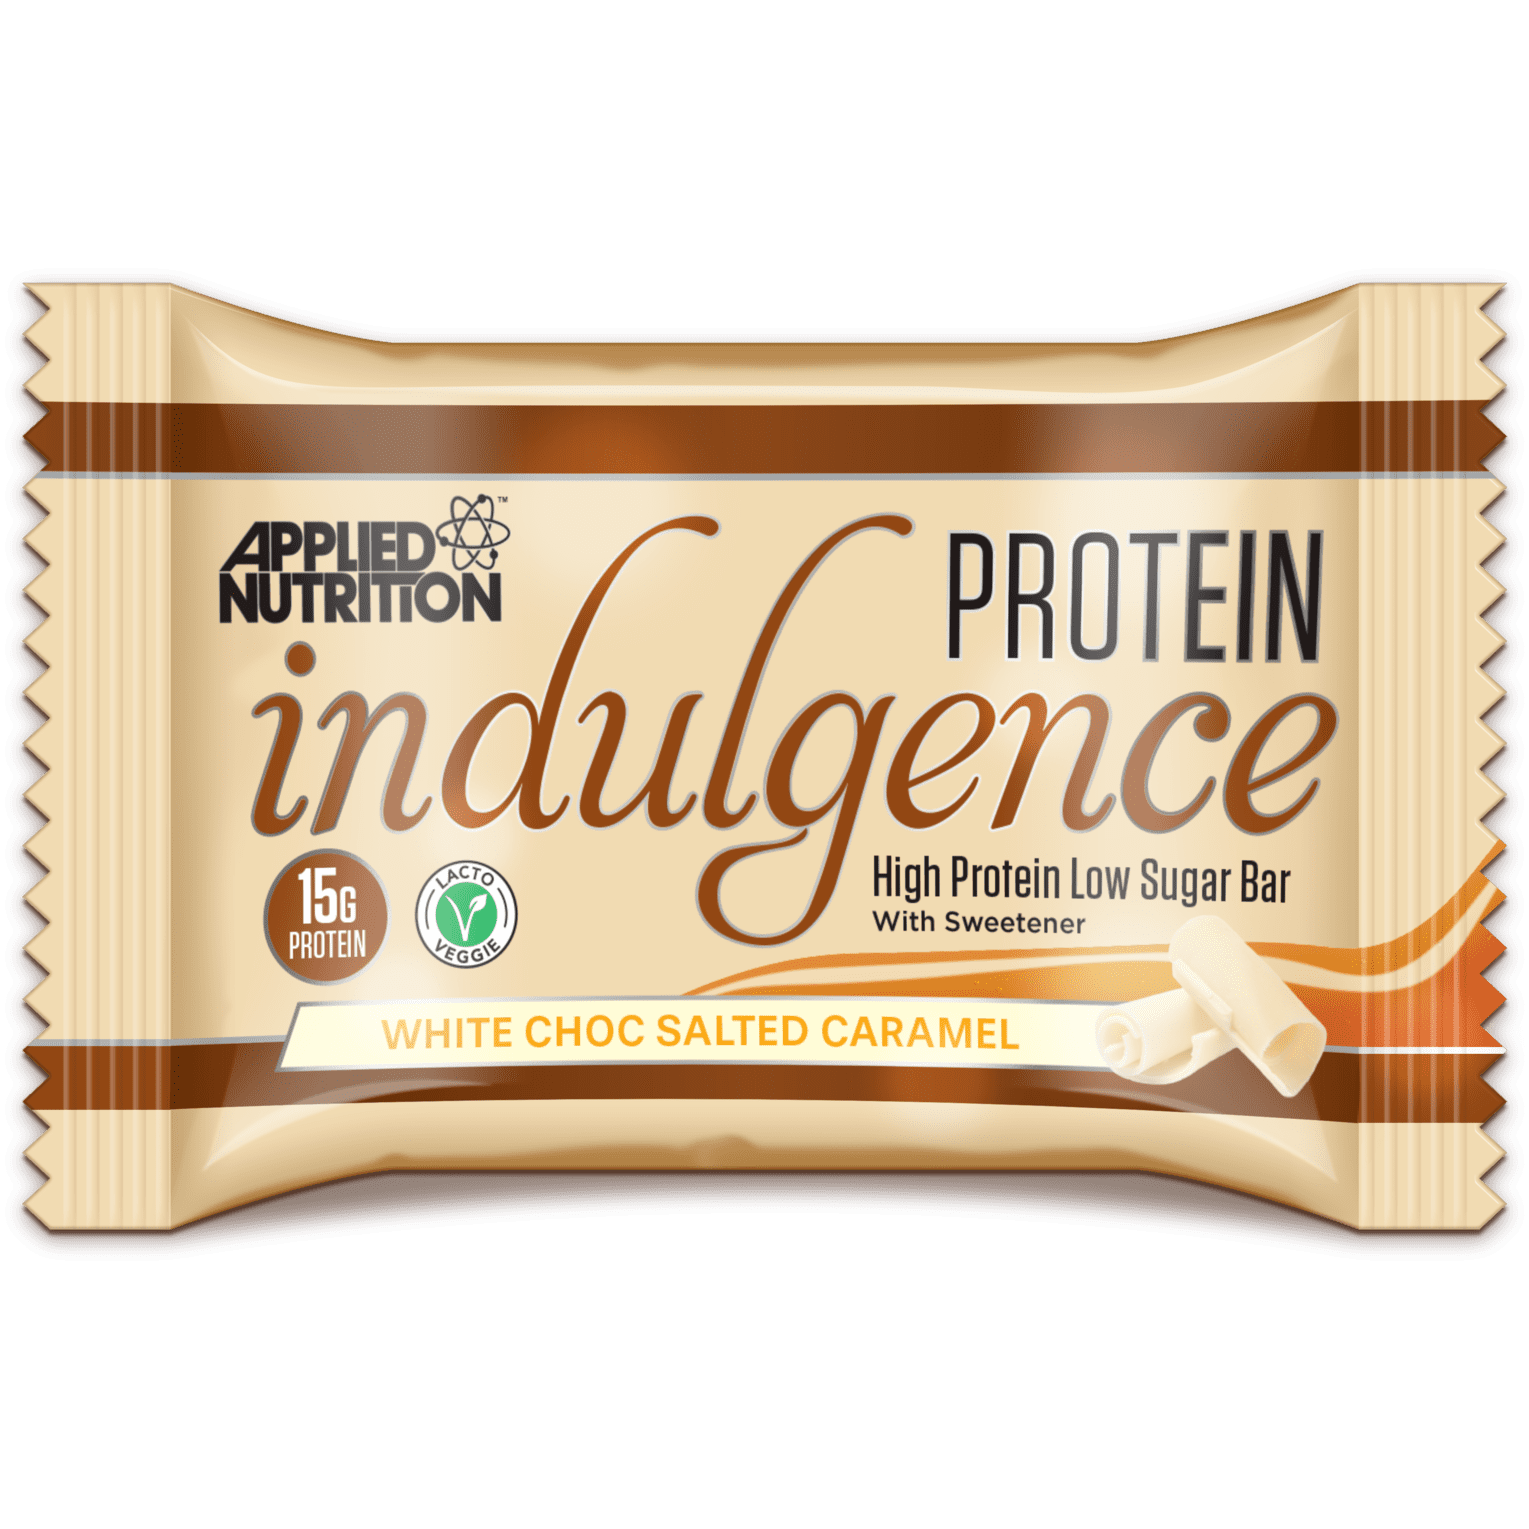 Applied Nutrition Protein Indulgence Bar 1 Bar White Choc Salted Caramel